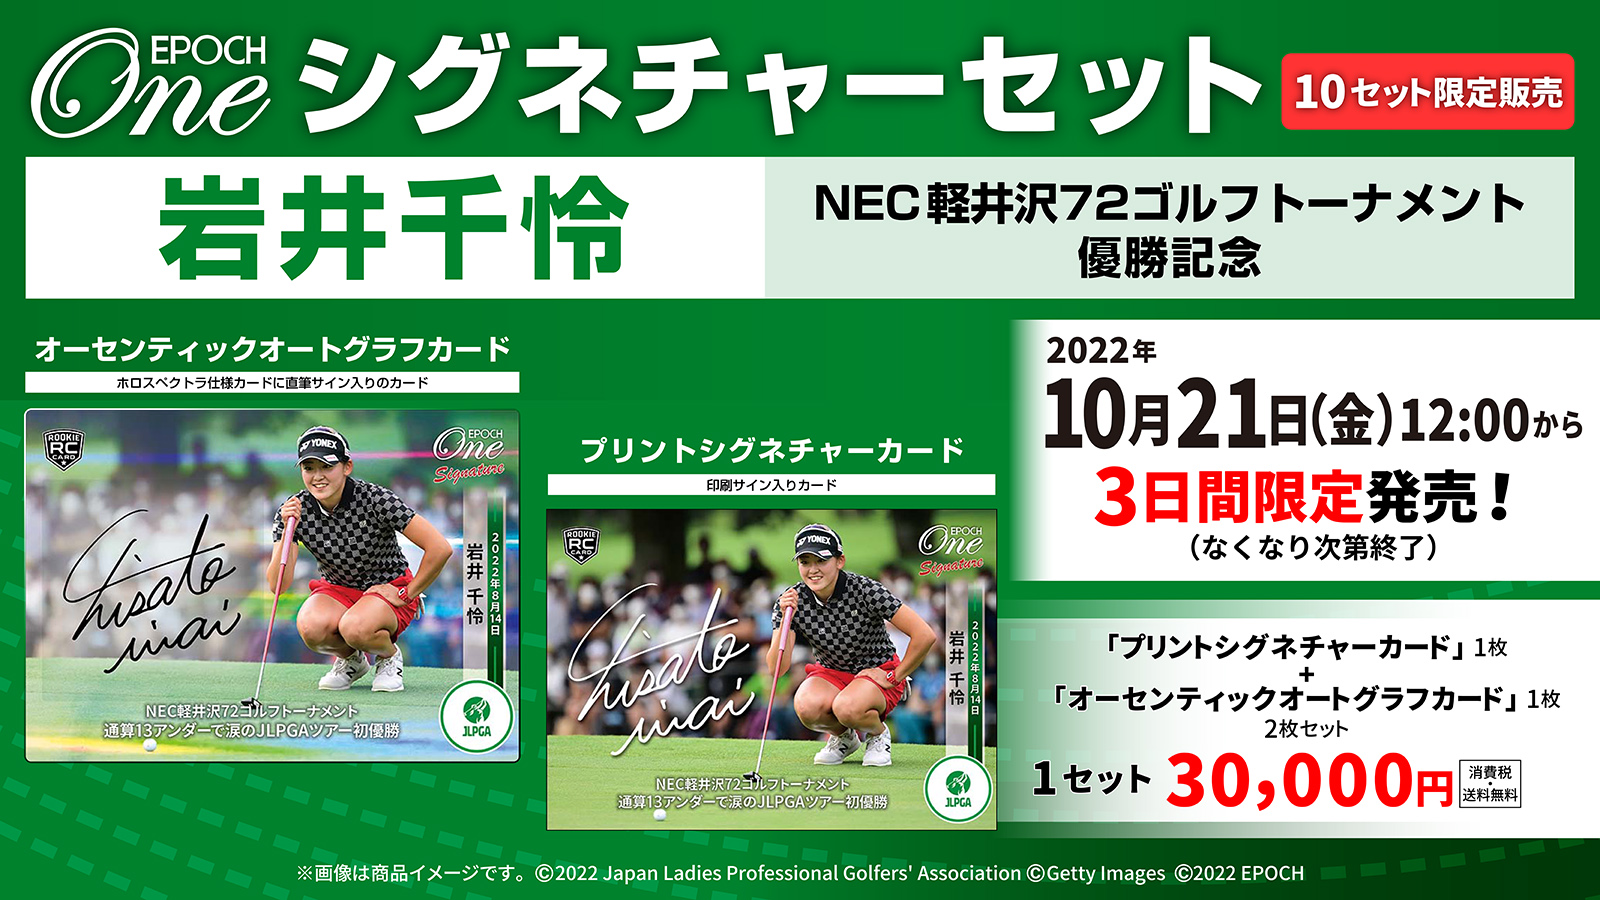 RC【岩井千怜】シグネチャーセット『NEC軽井沢72ゴルフトーナメント 優勝記念』